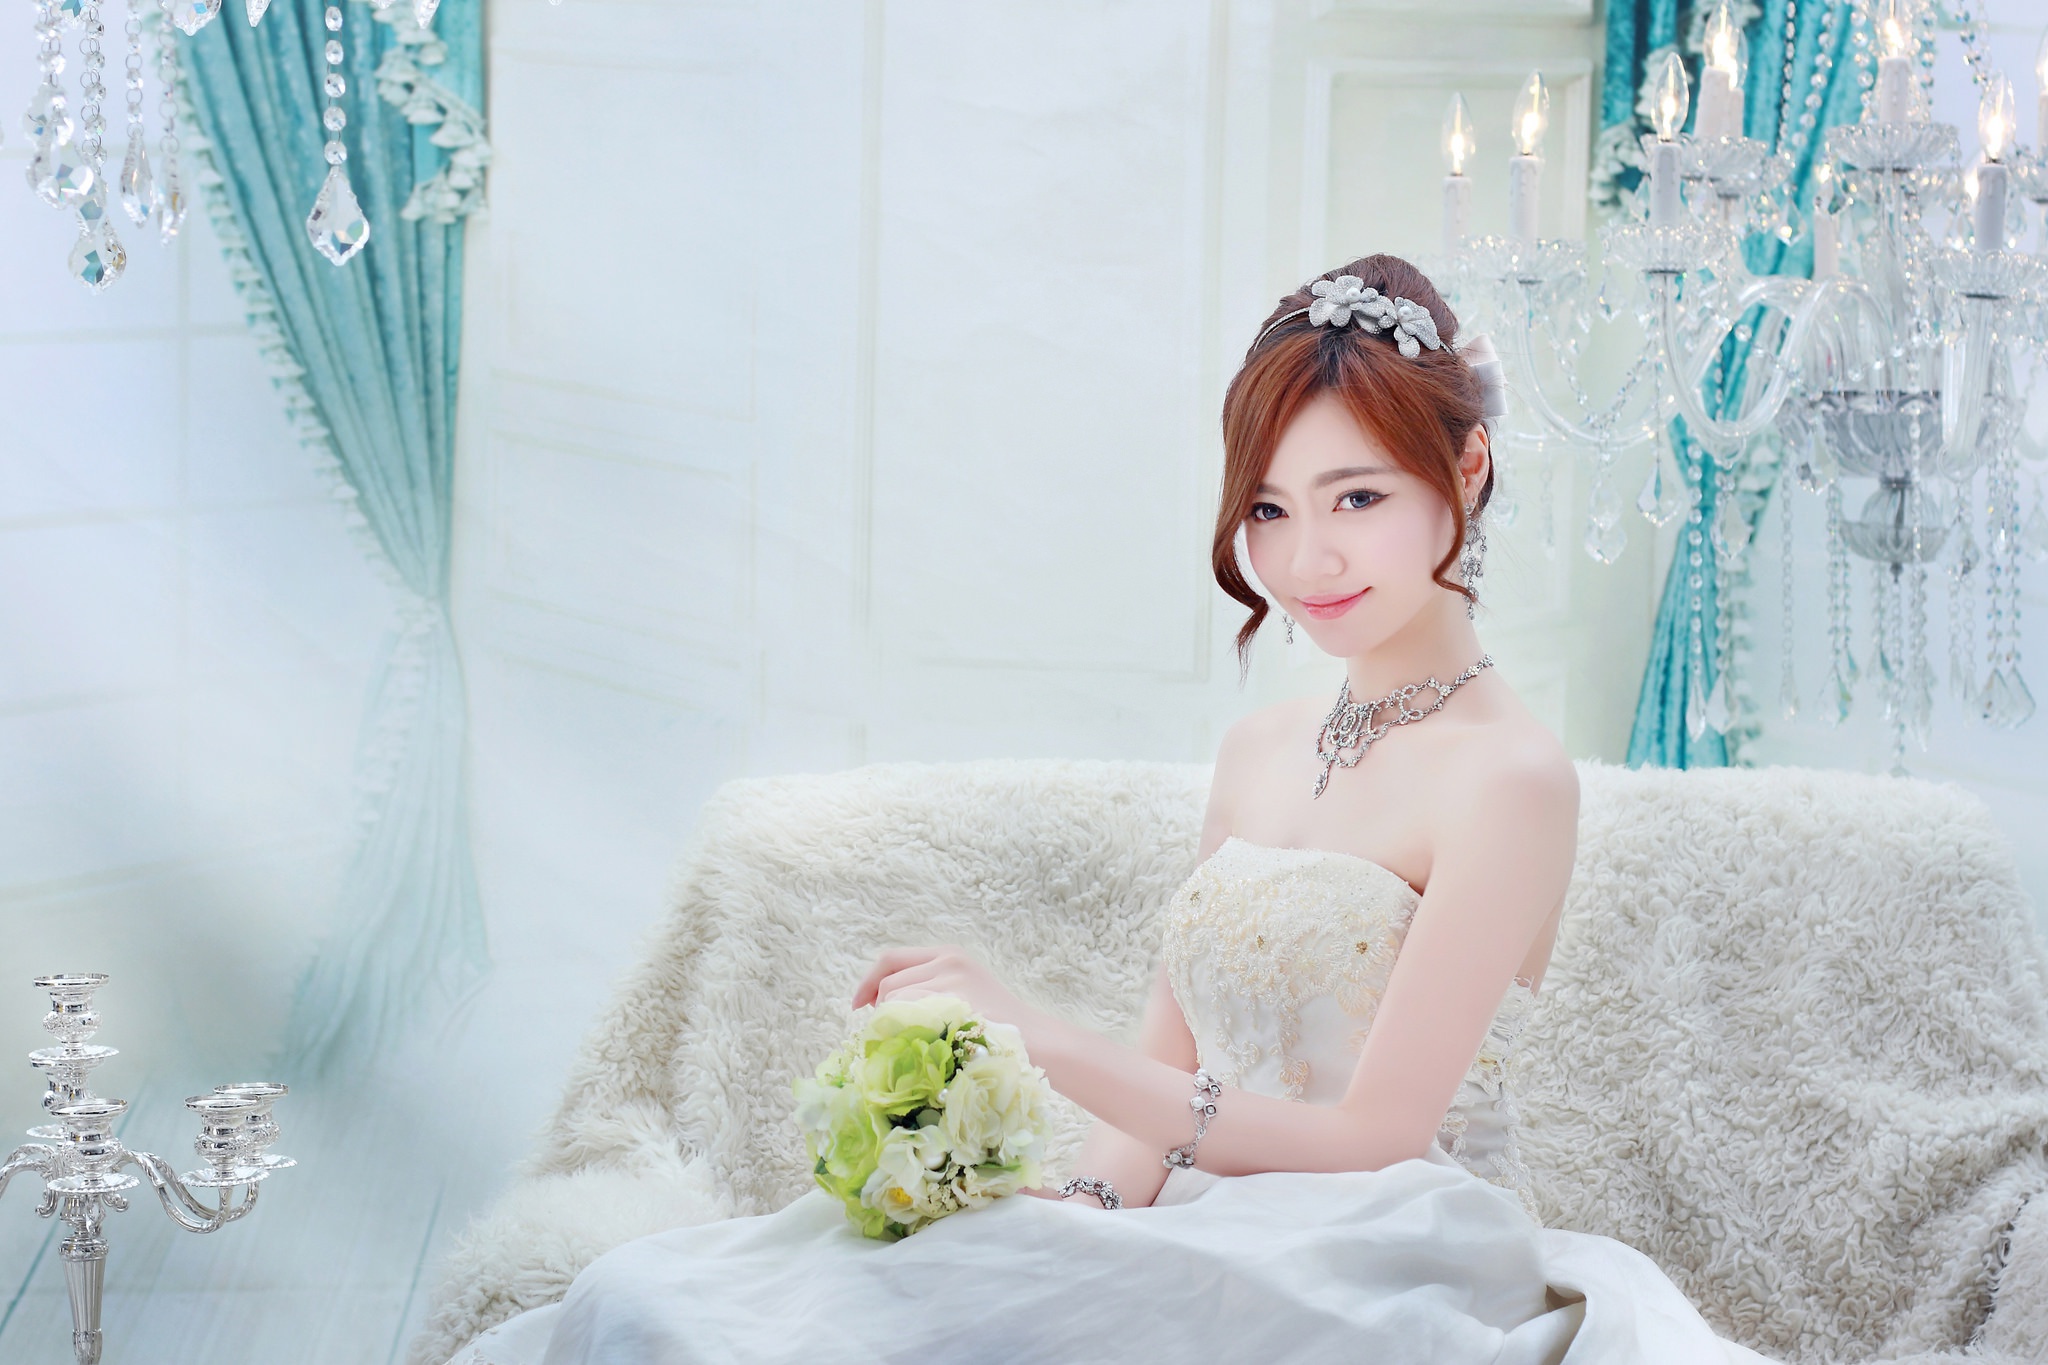 necklace, white dress, wedding dress, chandelier, bride, women, asian, redhead